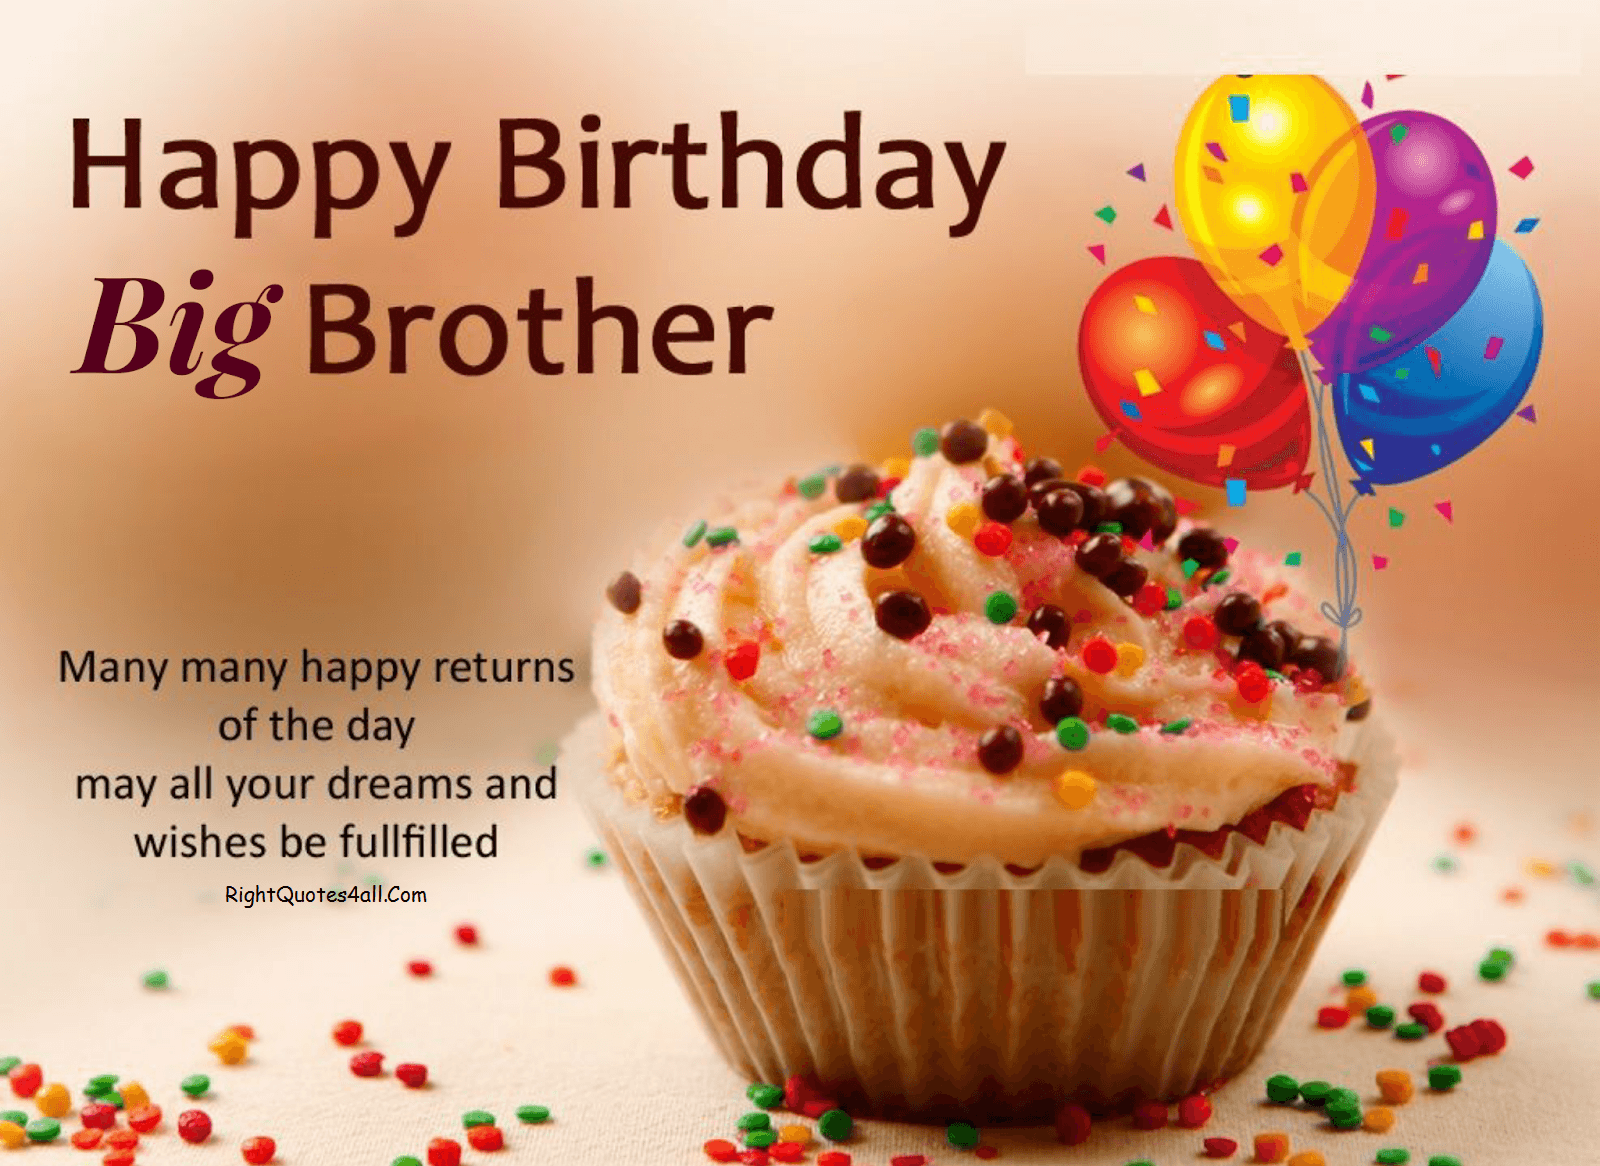 Happy Birthday Big Brother.